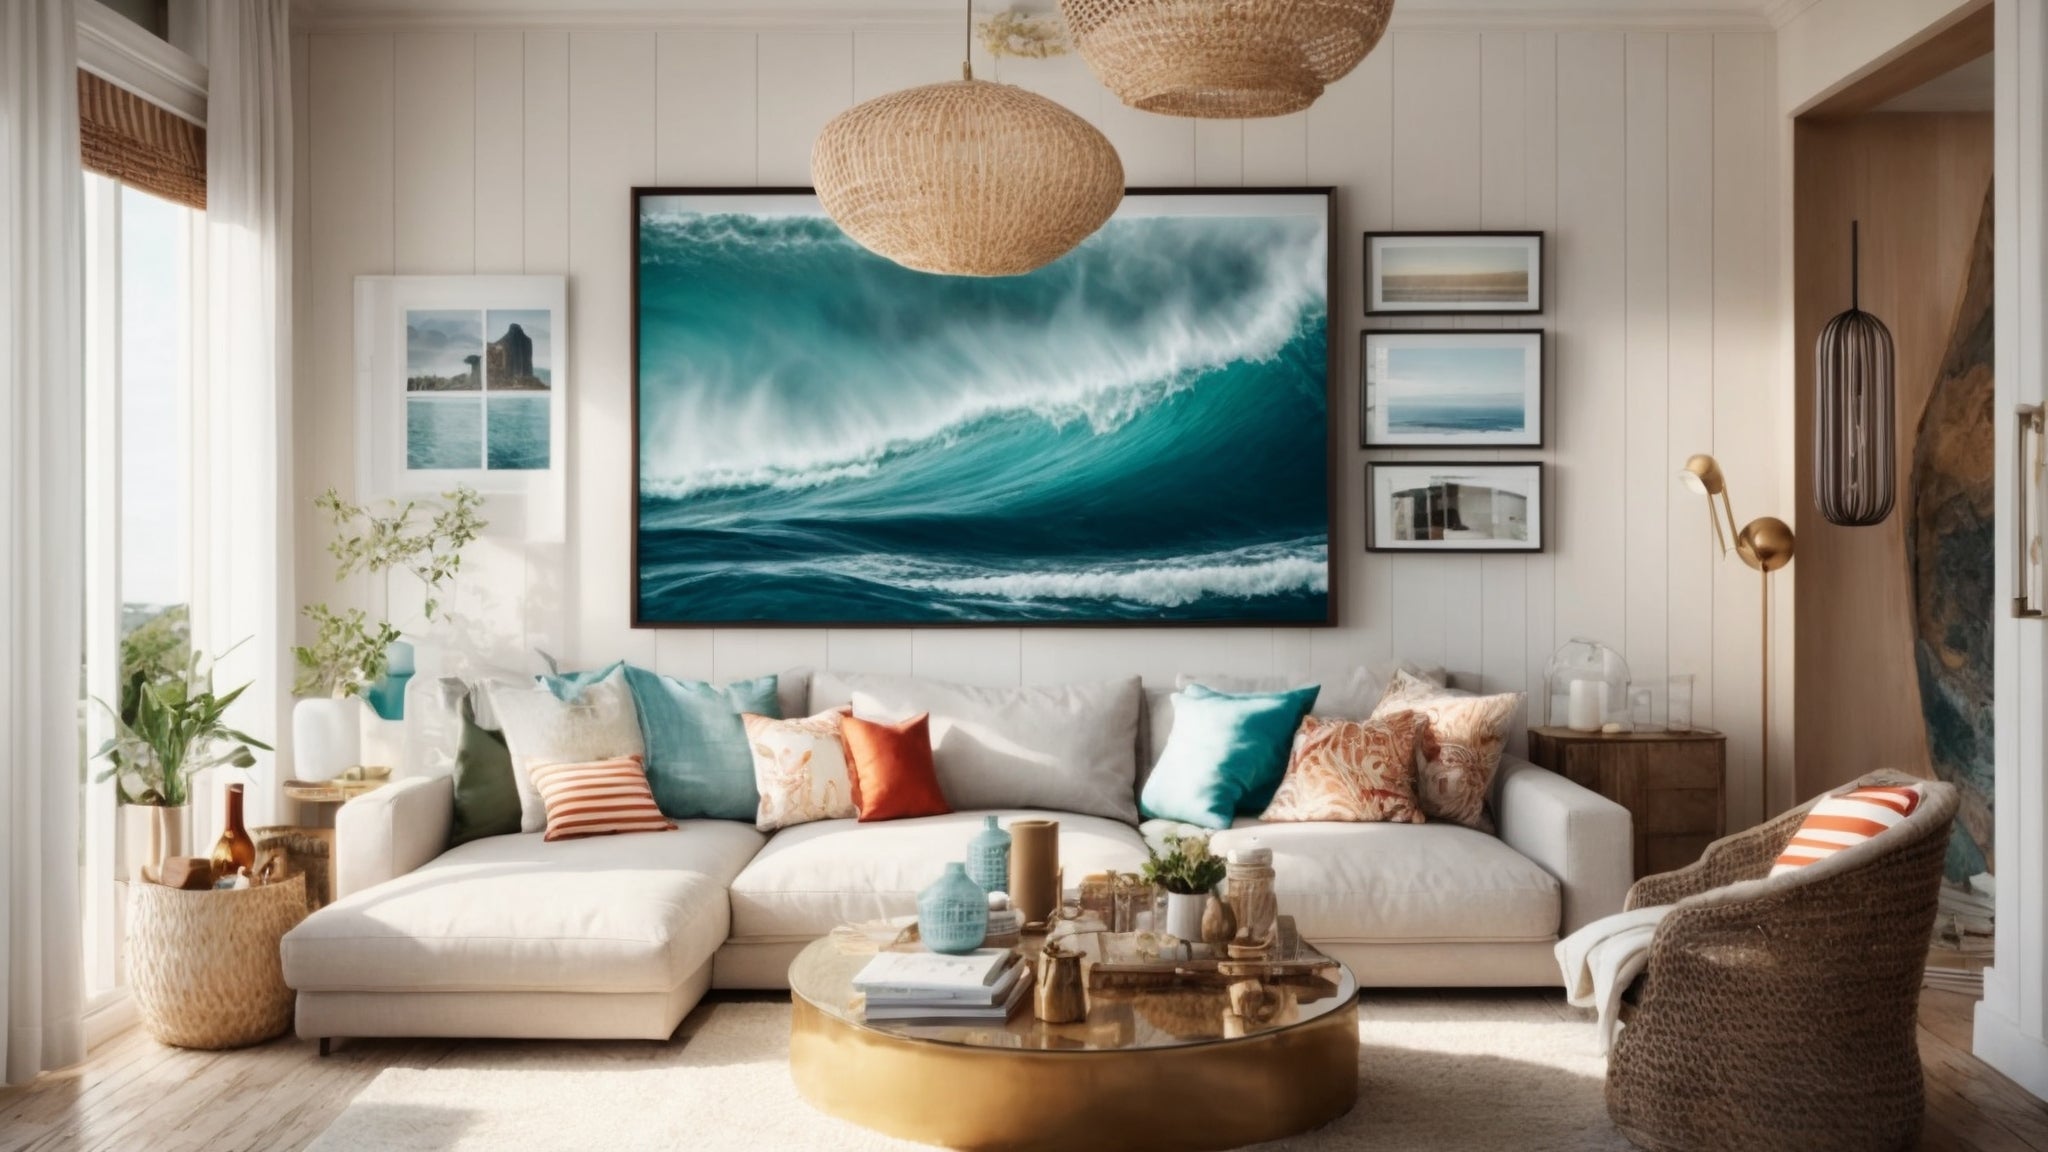 Nautical Living Room Decor: Essential Elements for a Coastal Look